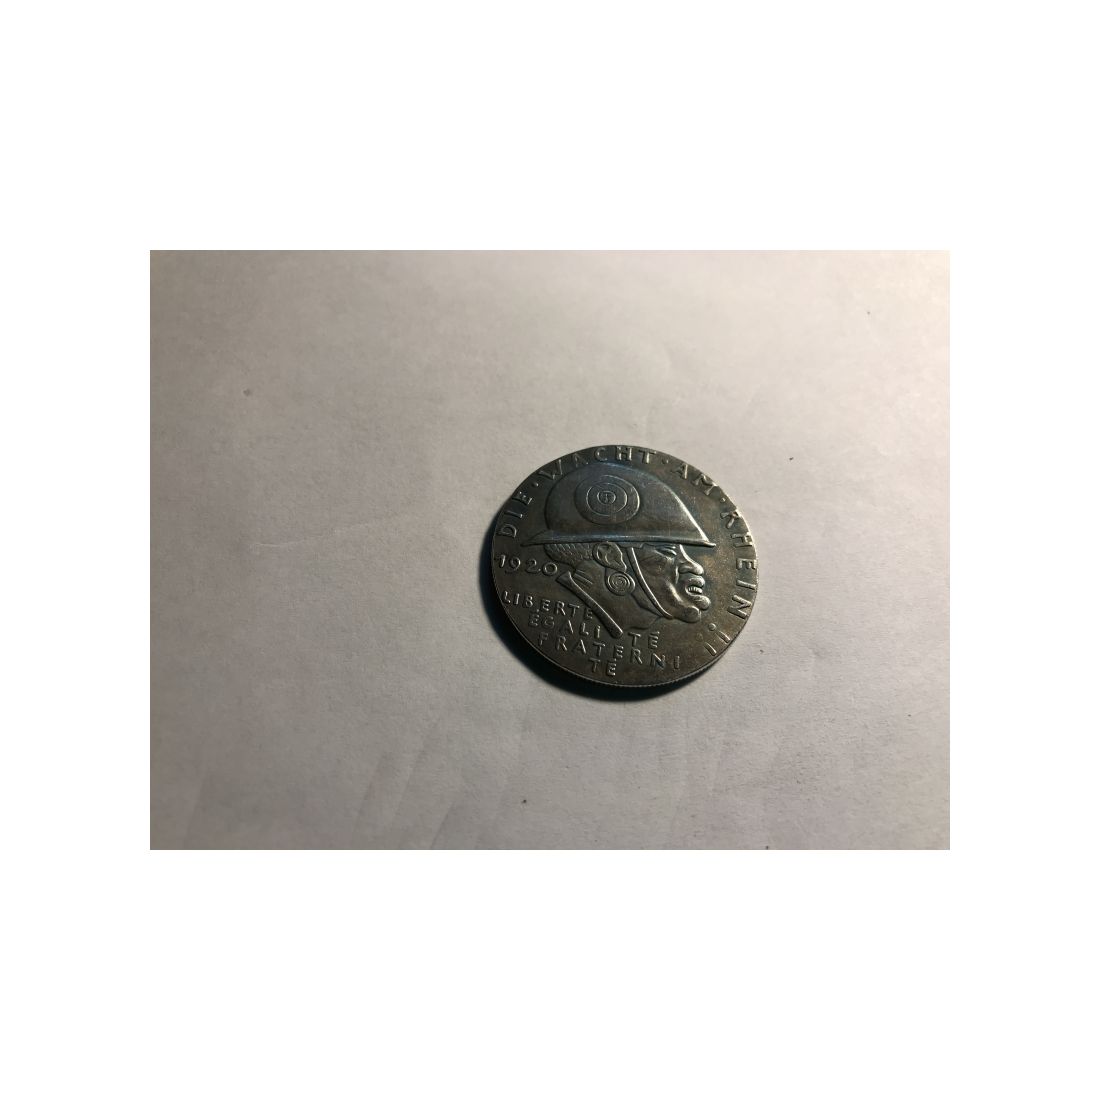 Münze/Medaille  Die Schwarze Schande/Die Wacht am Rhein, silberfarben